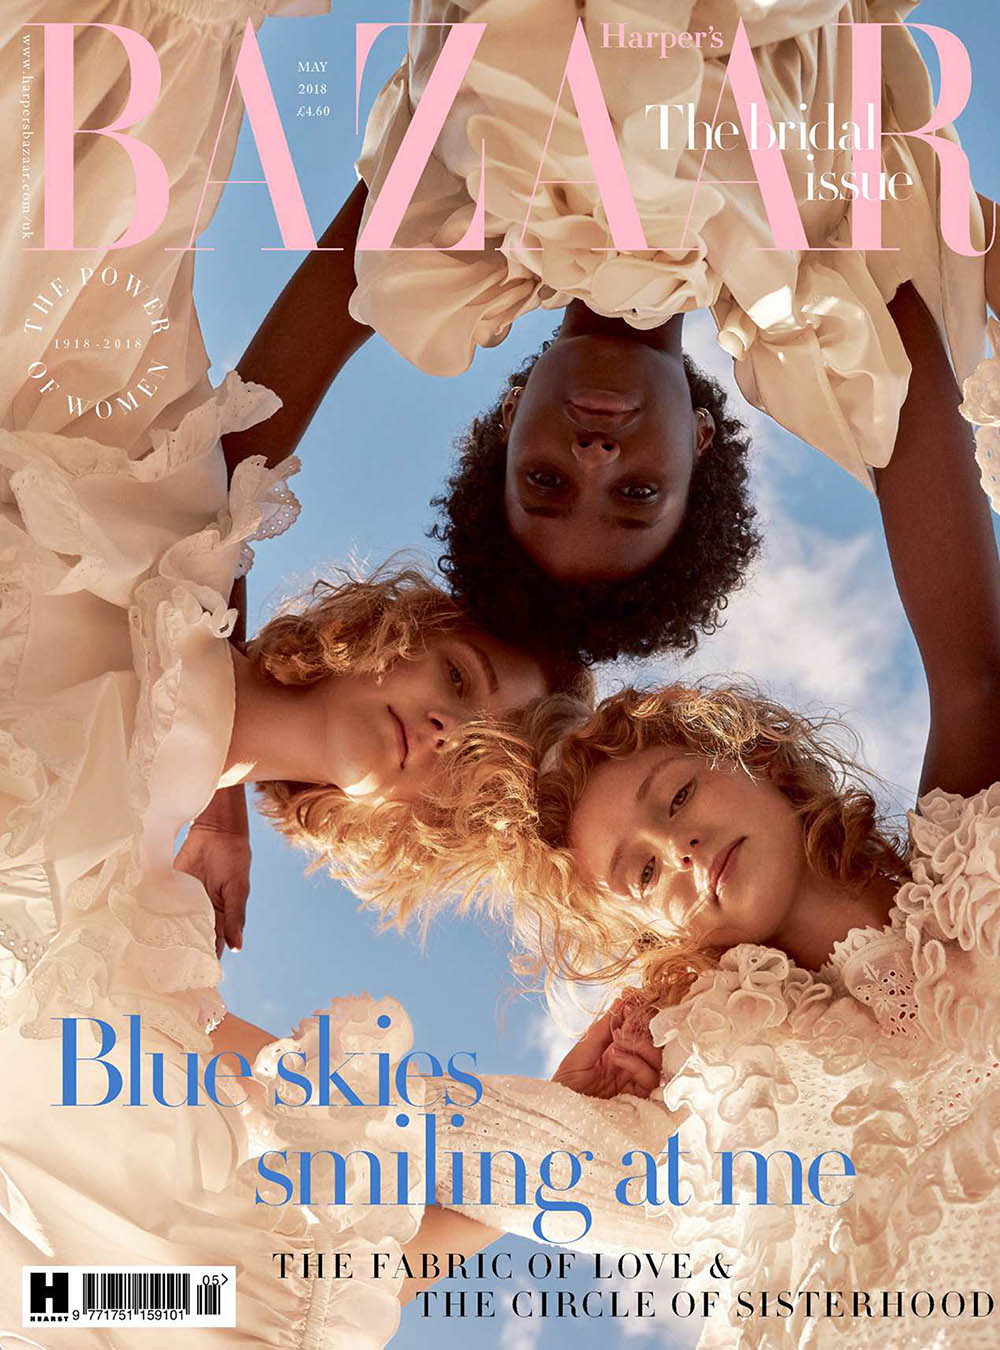 Harper’s Bazaar UK May 2018 cover by Agata Pospieszynska